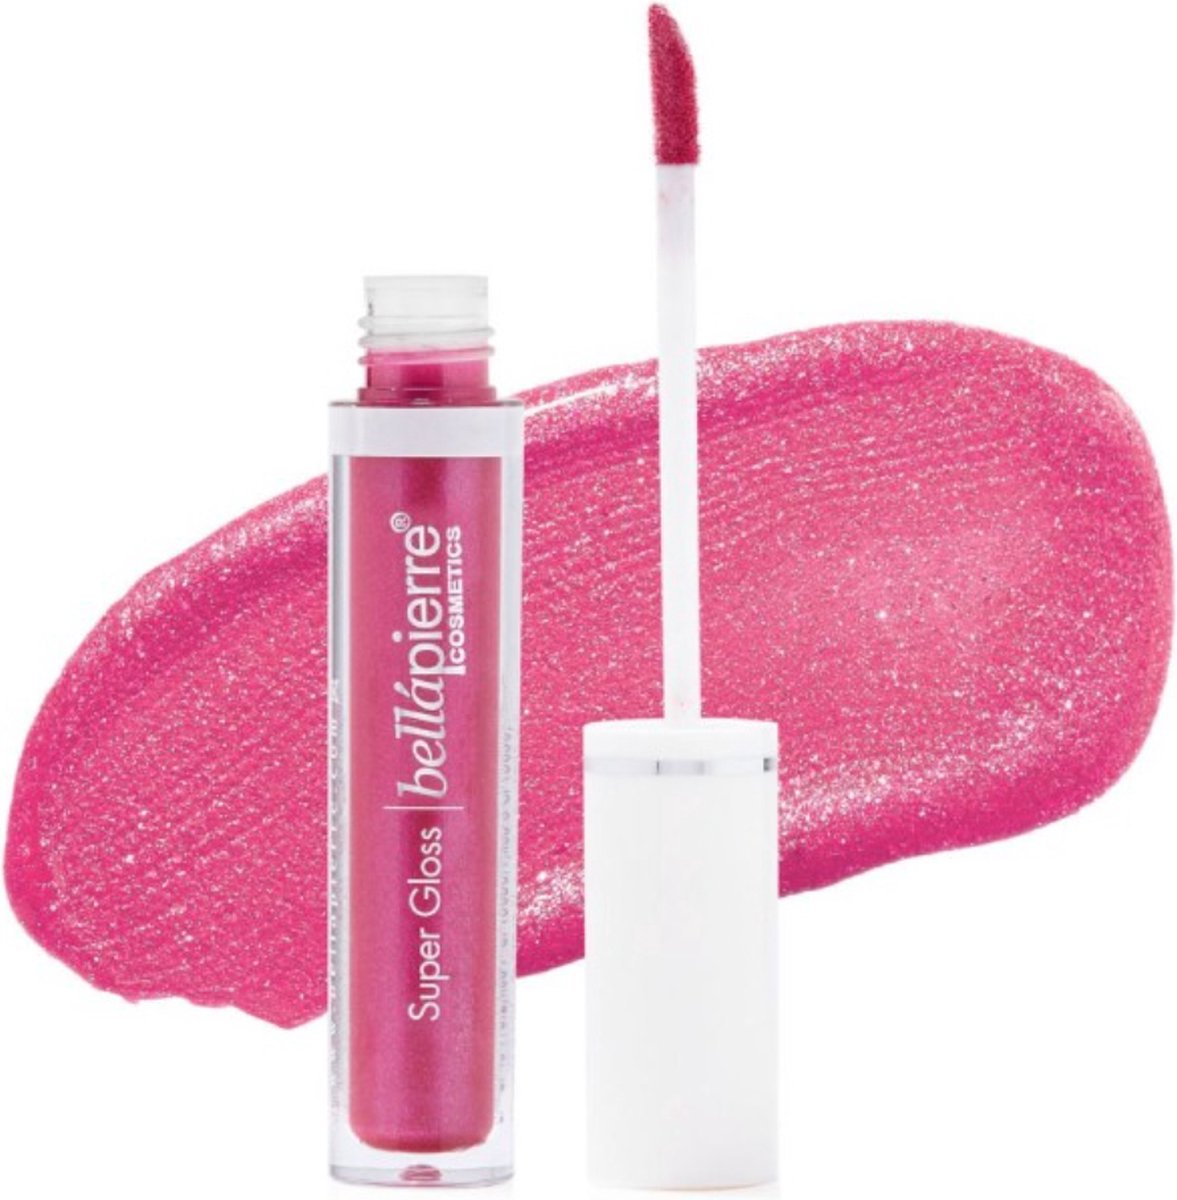 Bellapierre- Supergloss - Lipgloss - Lip verzorging - Make up - Bubblegum - Mineraal